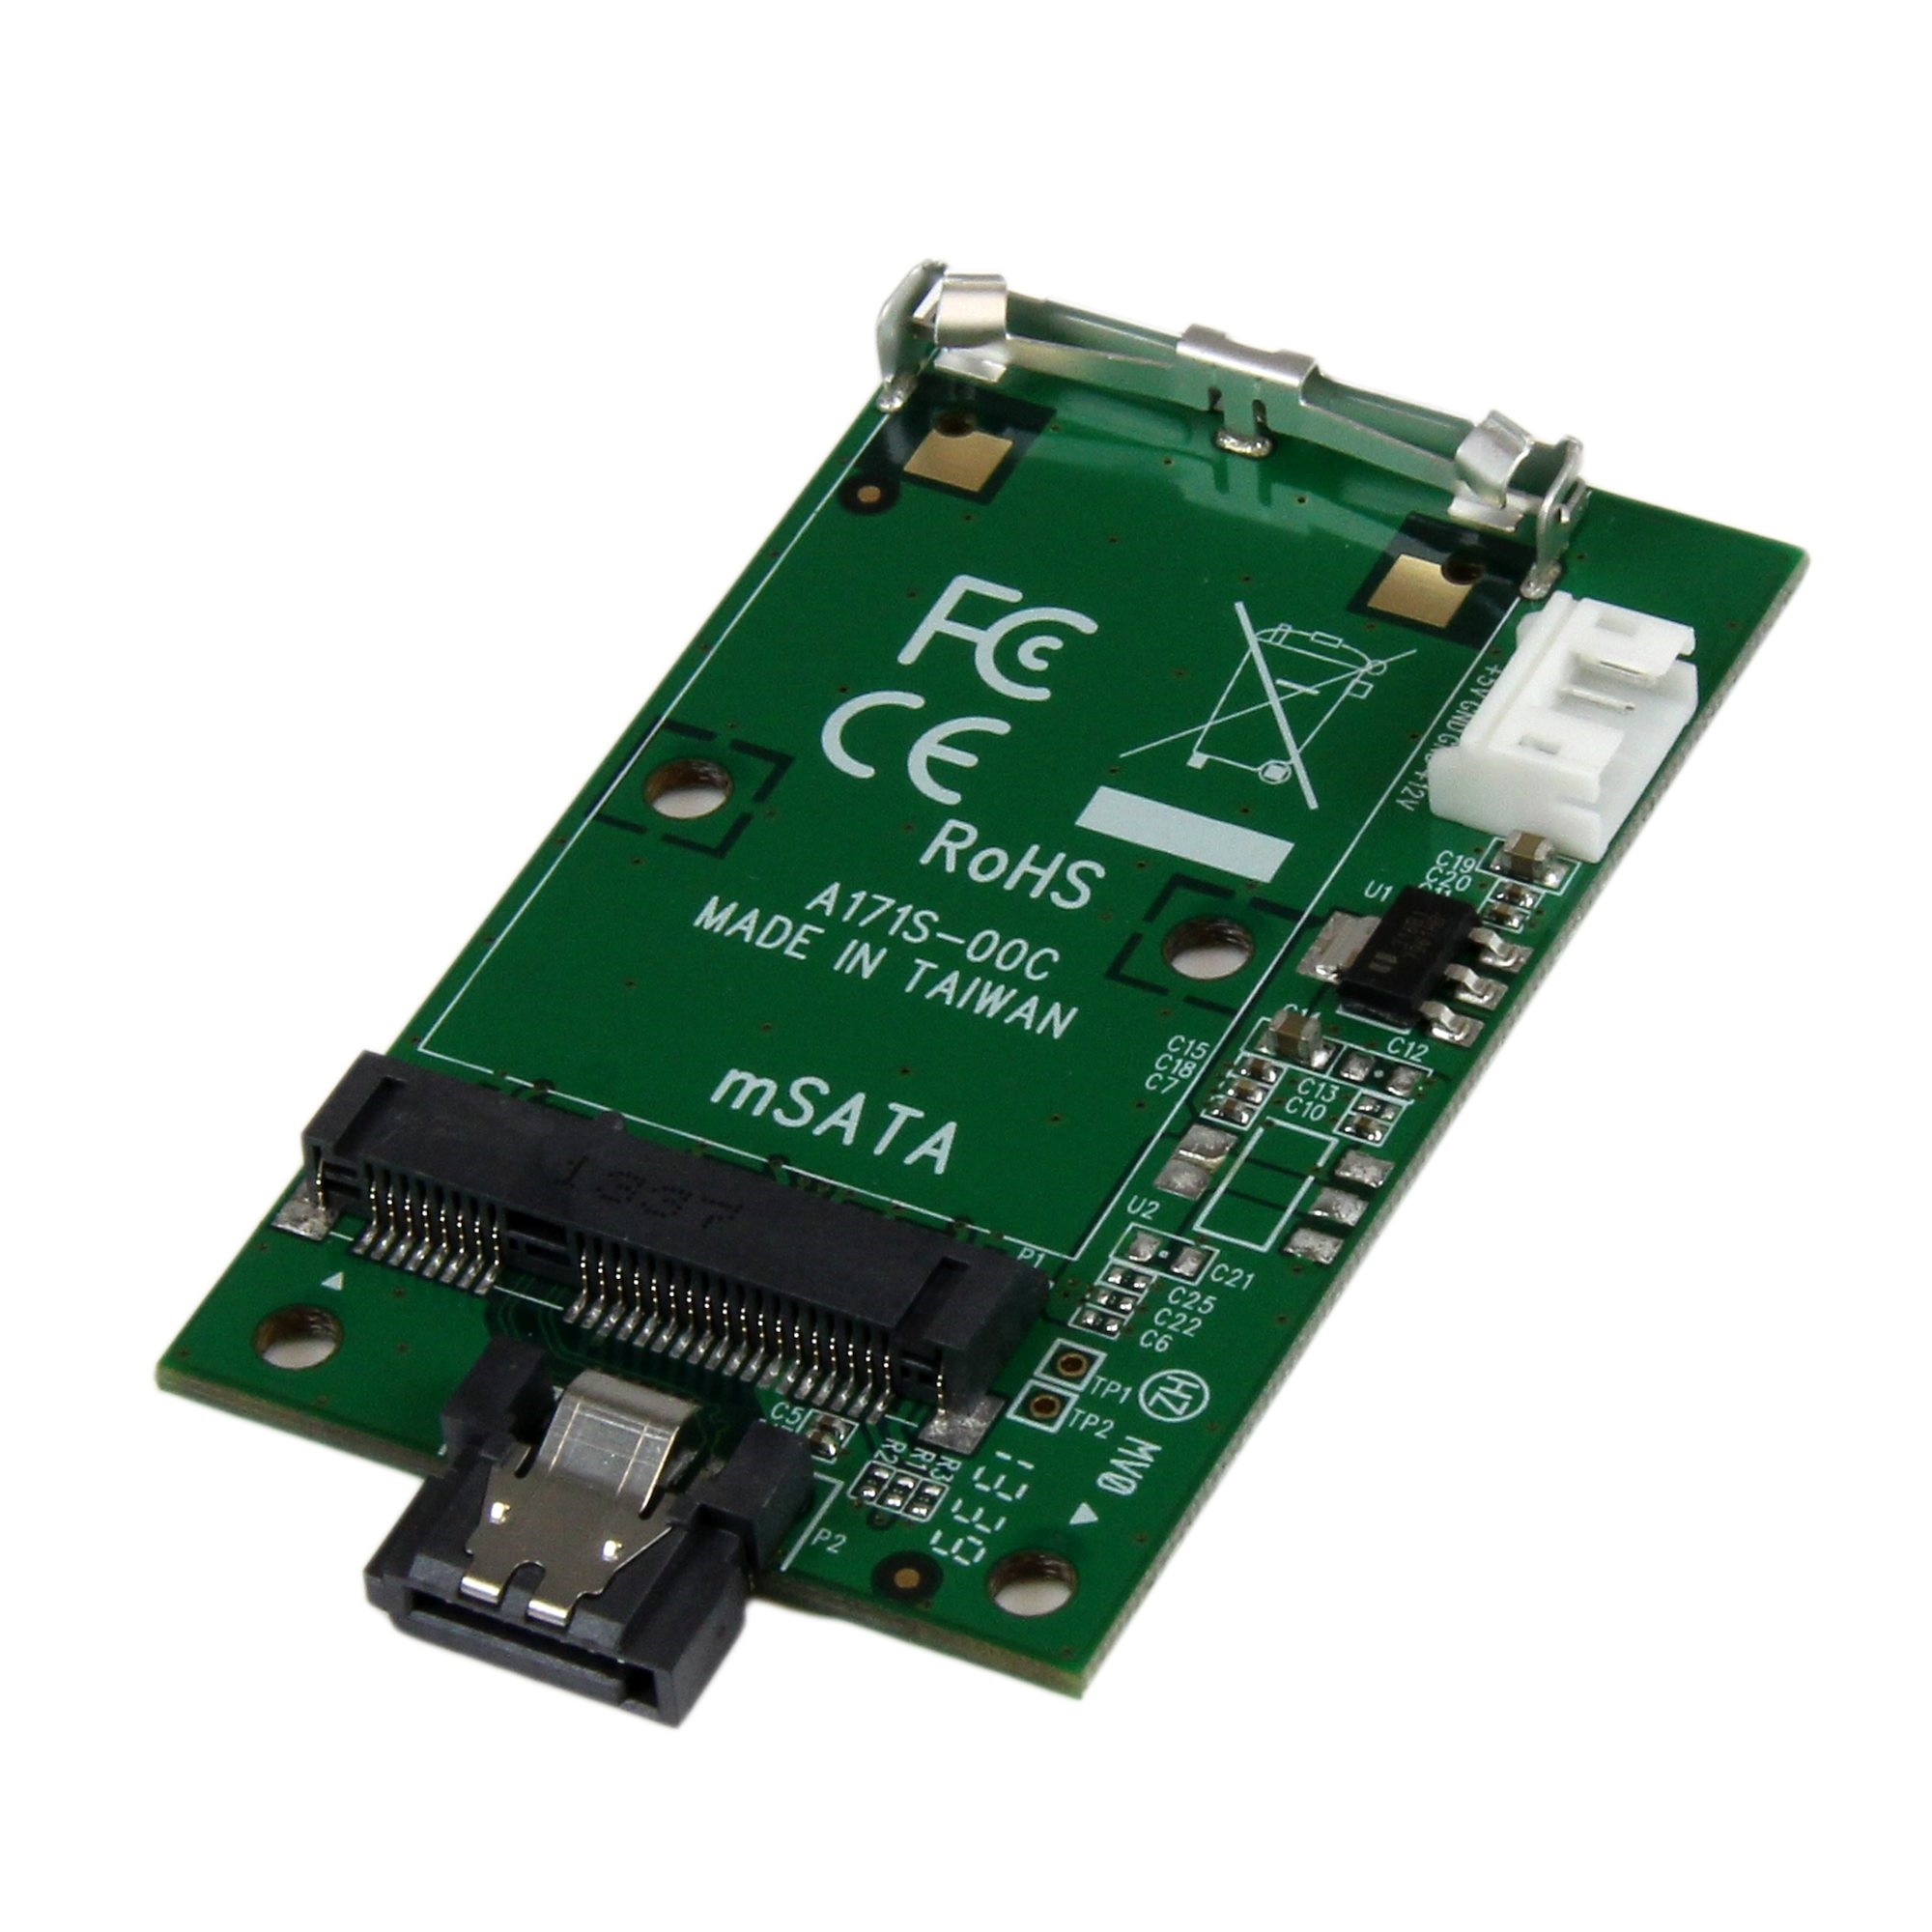 StarTech SATA to mSATA Adapter Converter Card